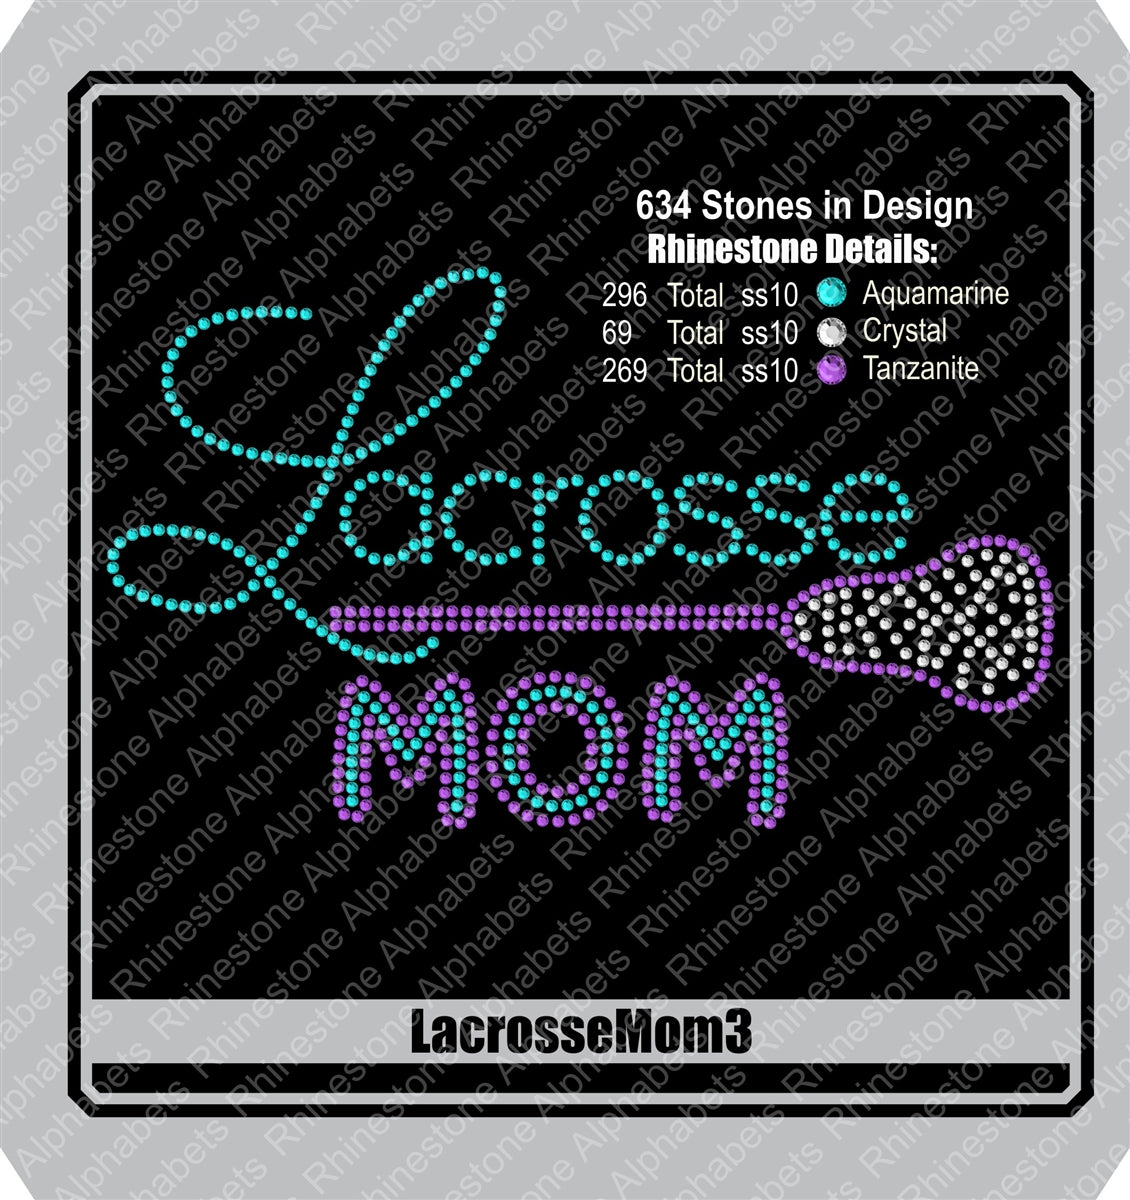 Lacrosse Mom 3 ,TTF Rhinestone Fonts & Rhinestone Designs